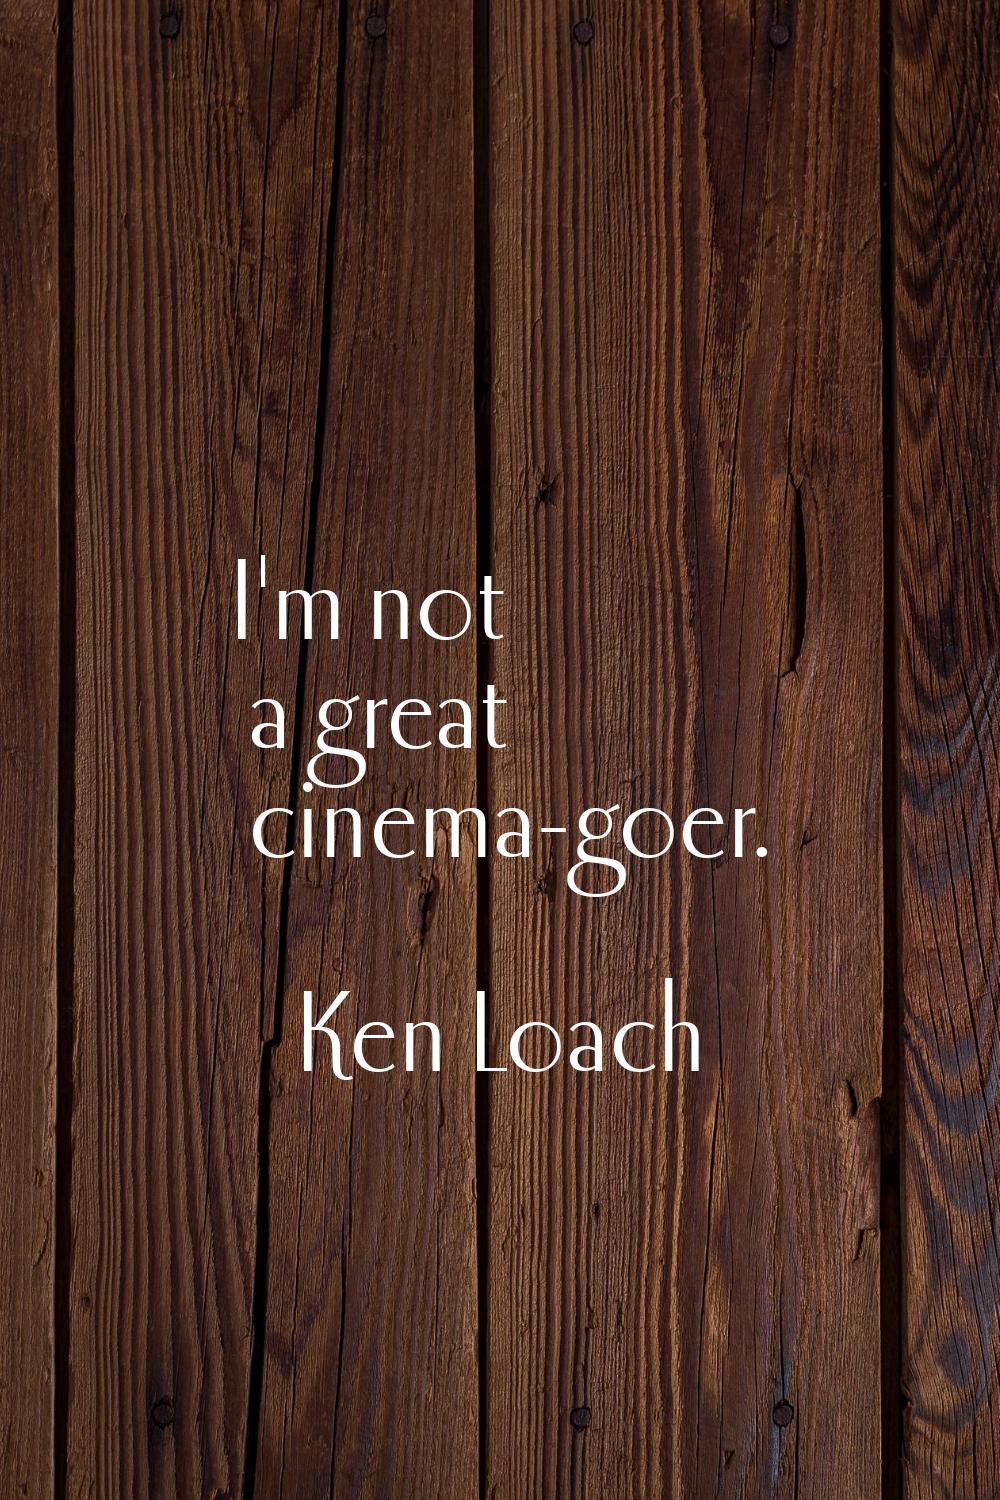 I'm not a great cinema-goer.